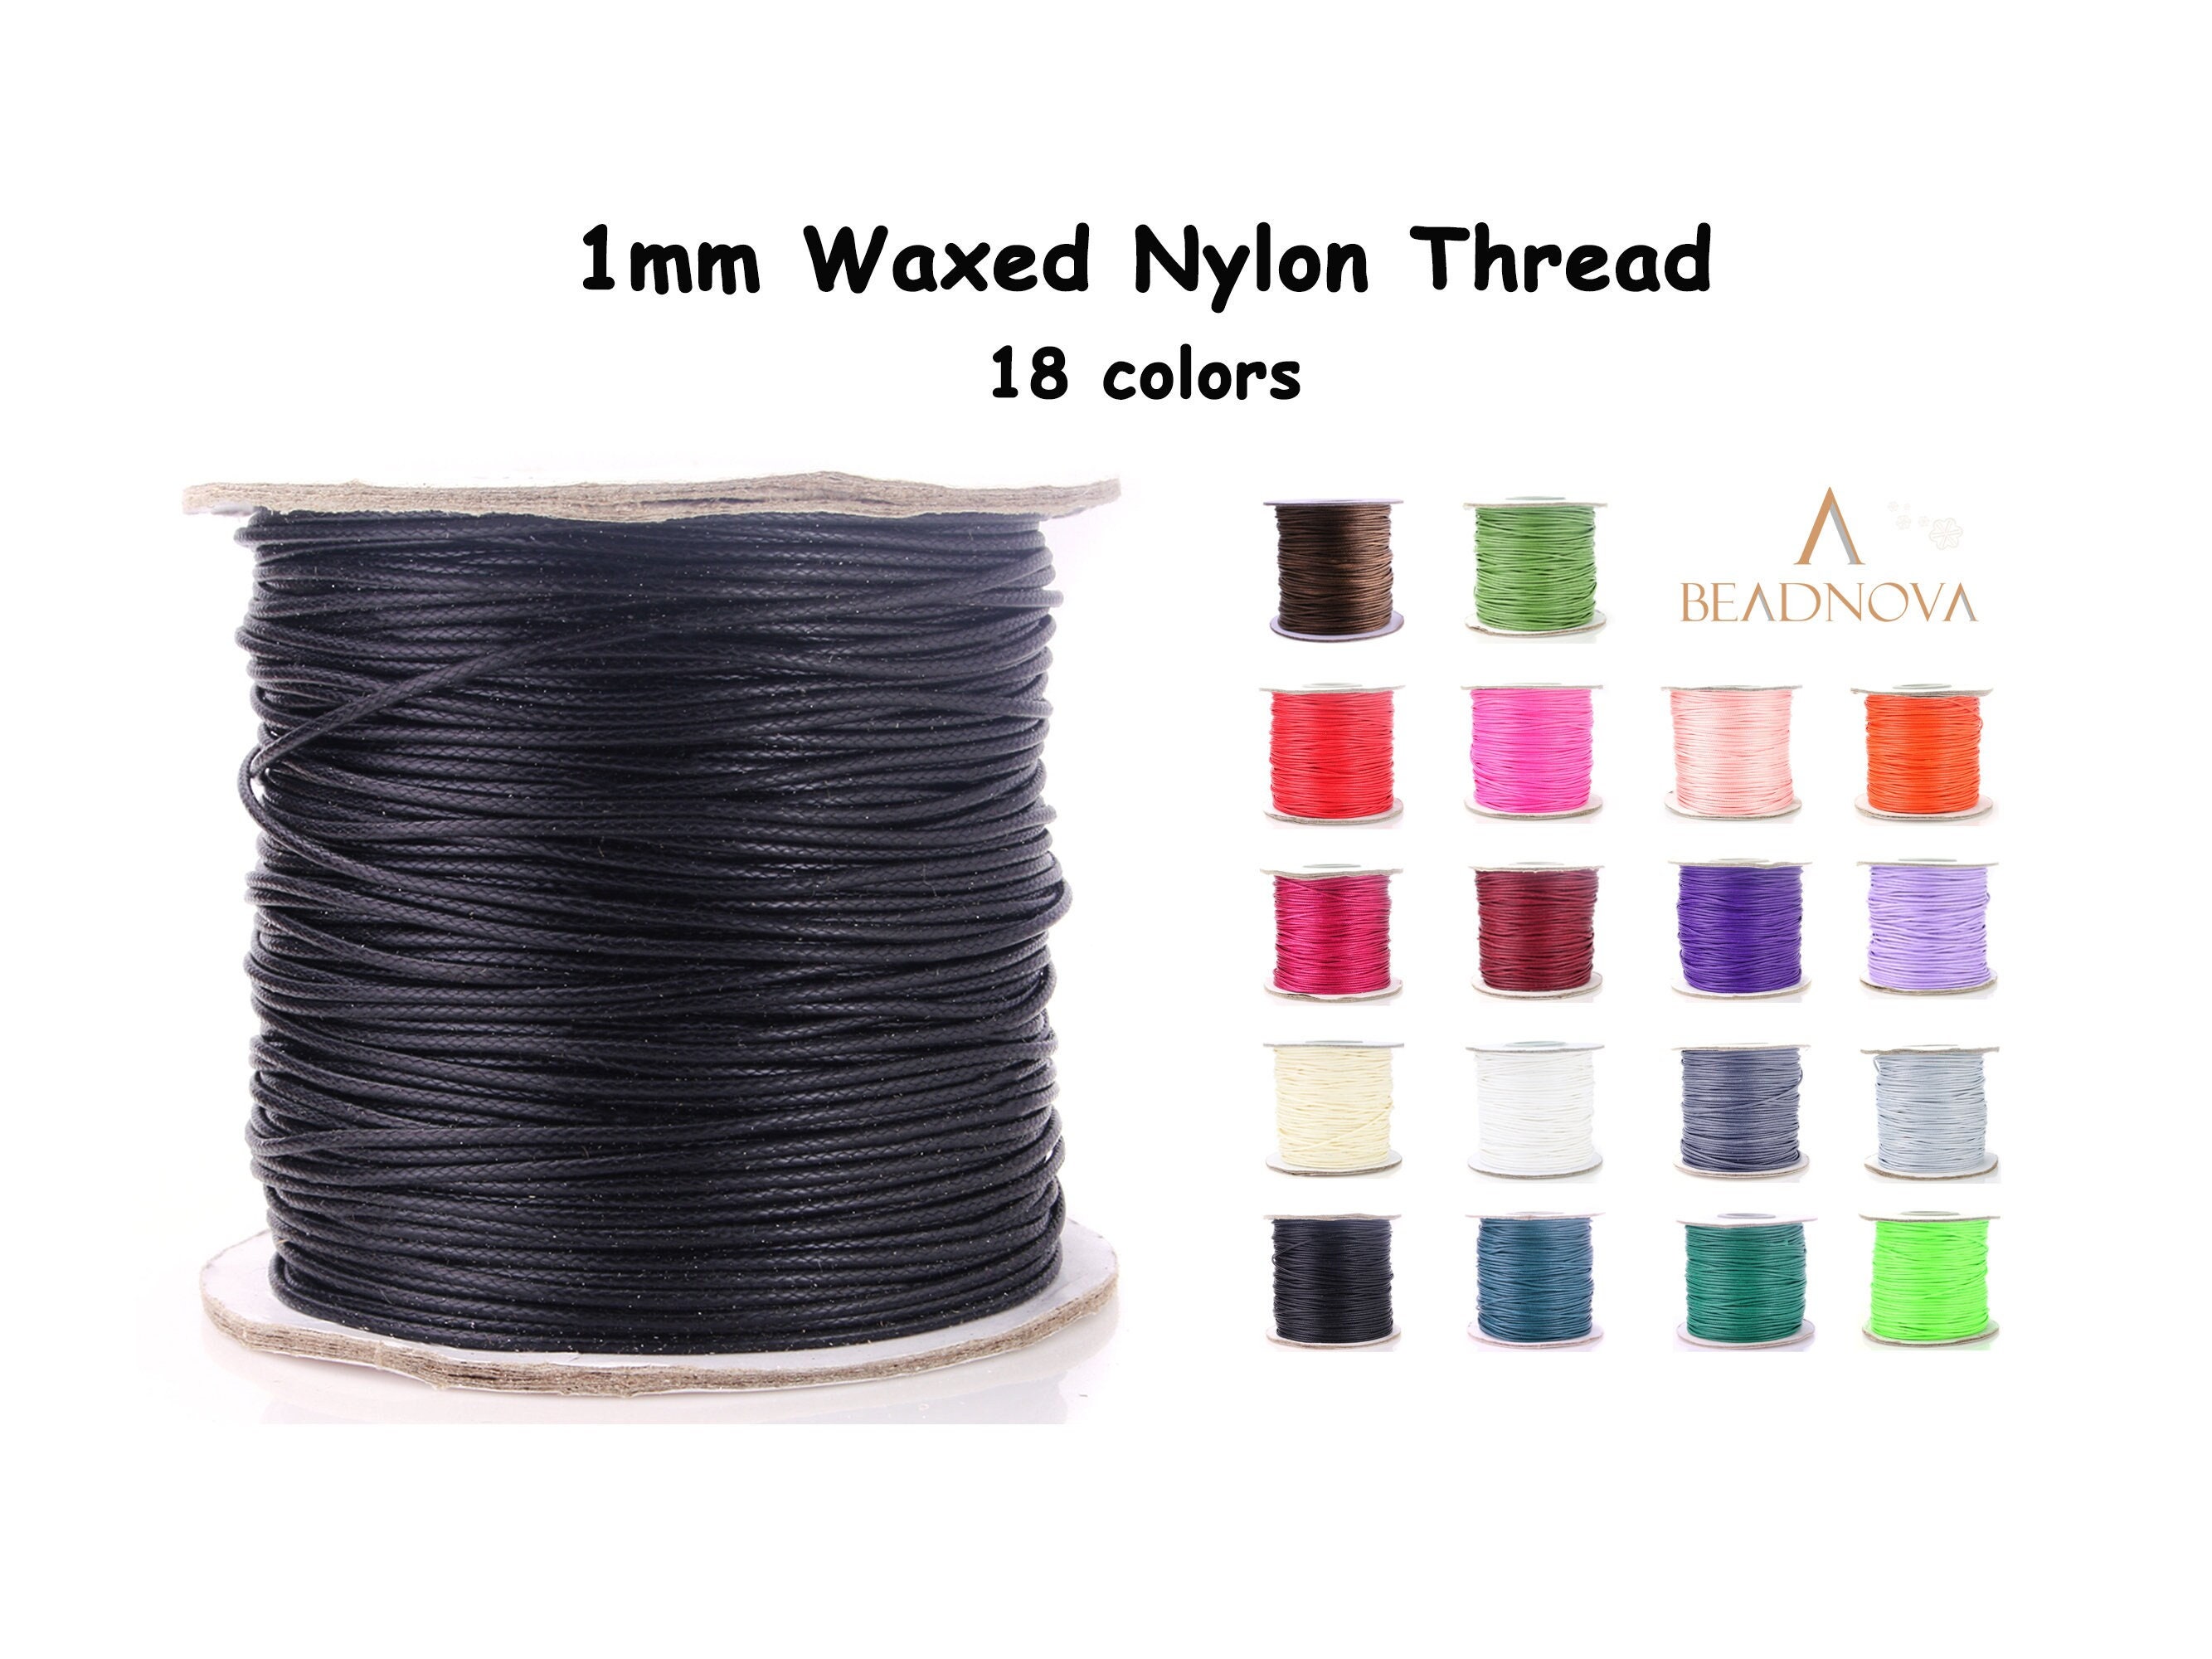 Timko Ltd - 2mm Black Braided Nylon Cord x 280m, Braided Nylon Twine